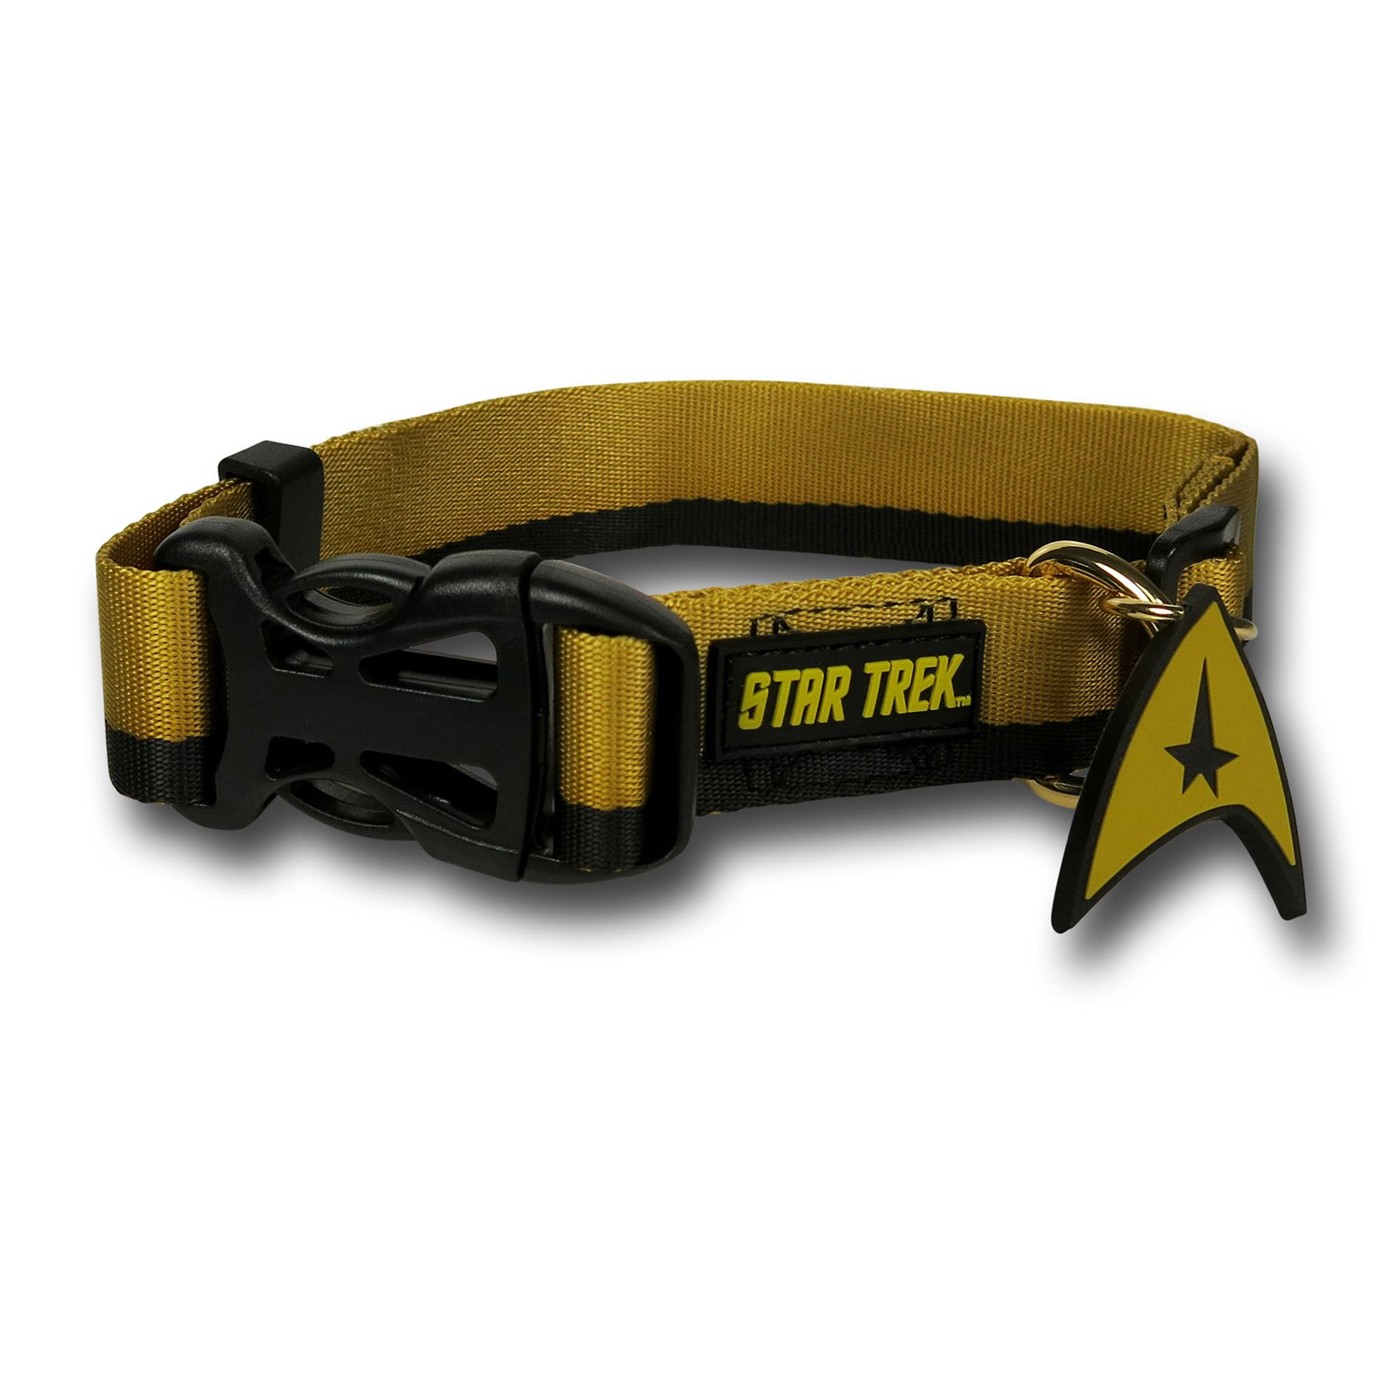 Star Trek Command Uniform Dog Collar